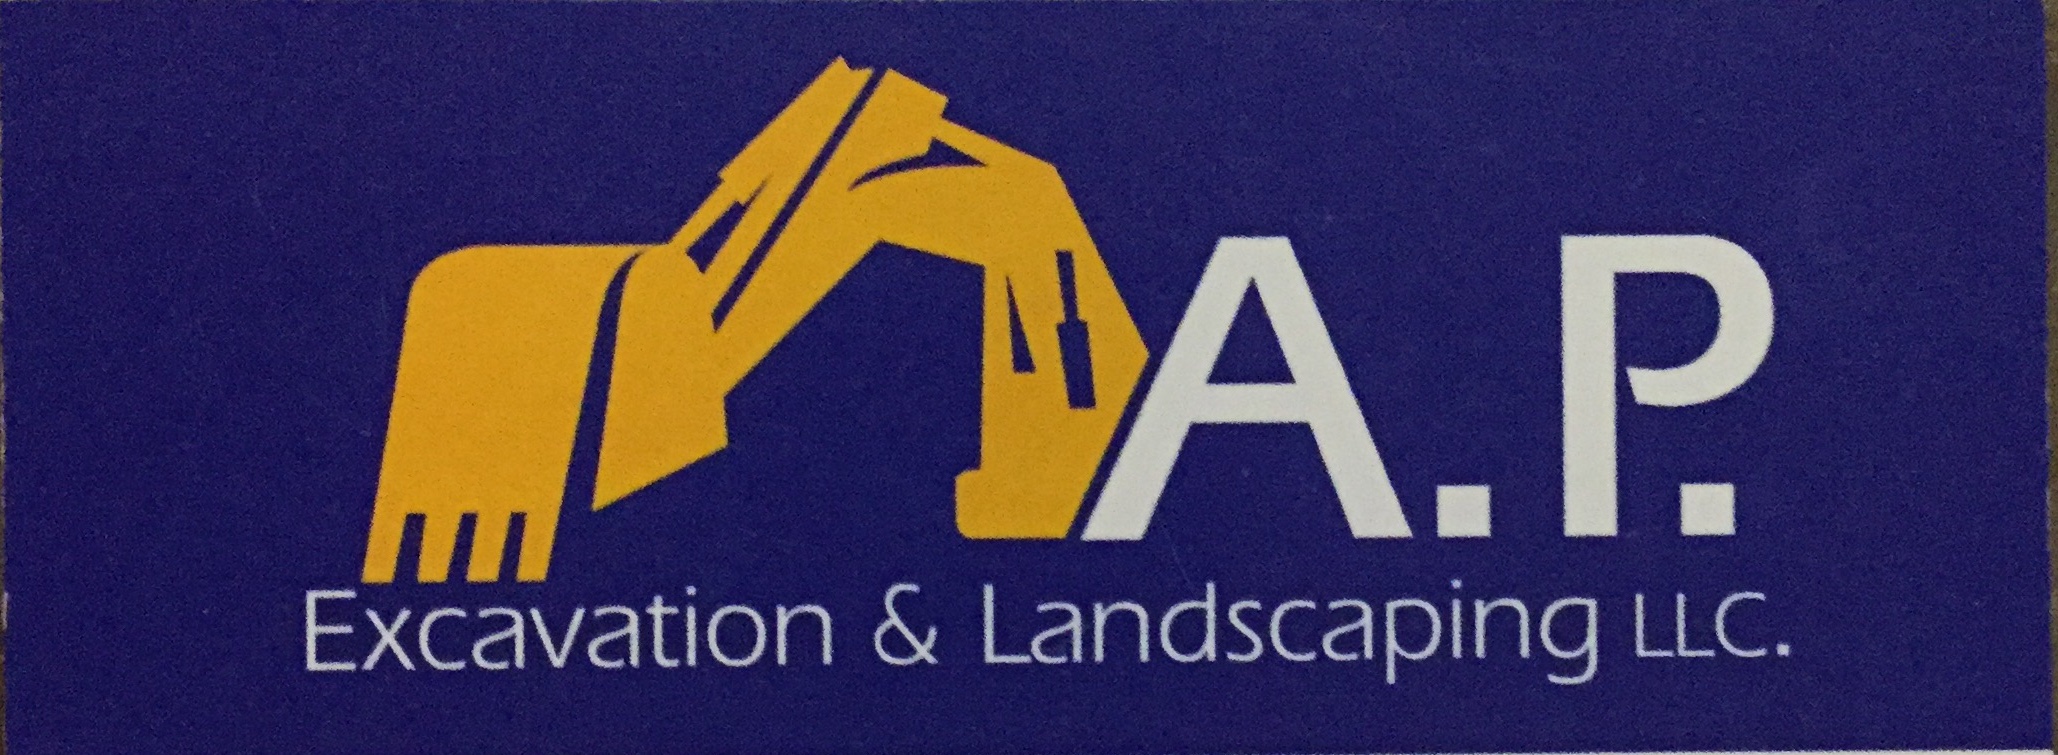 A.P. Excavation & Landscaping, LLC Logo